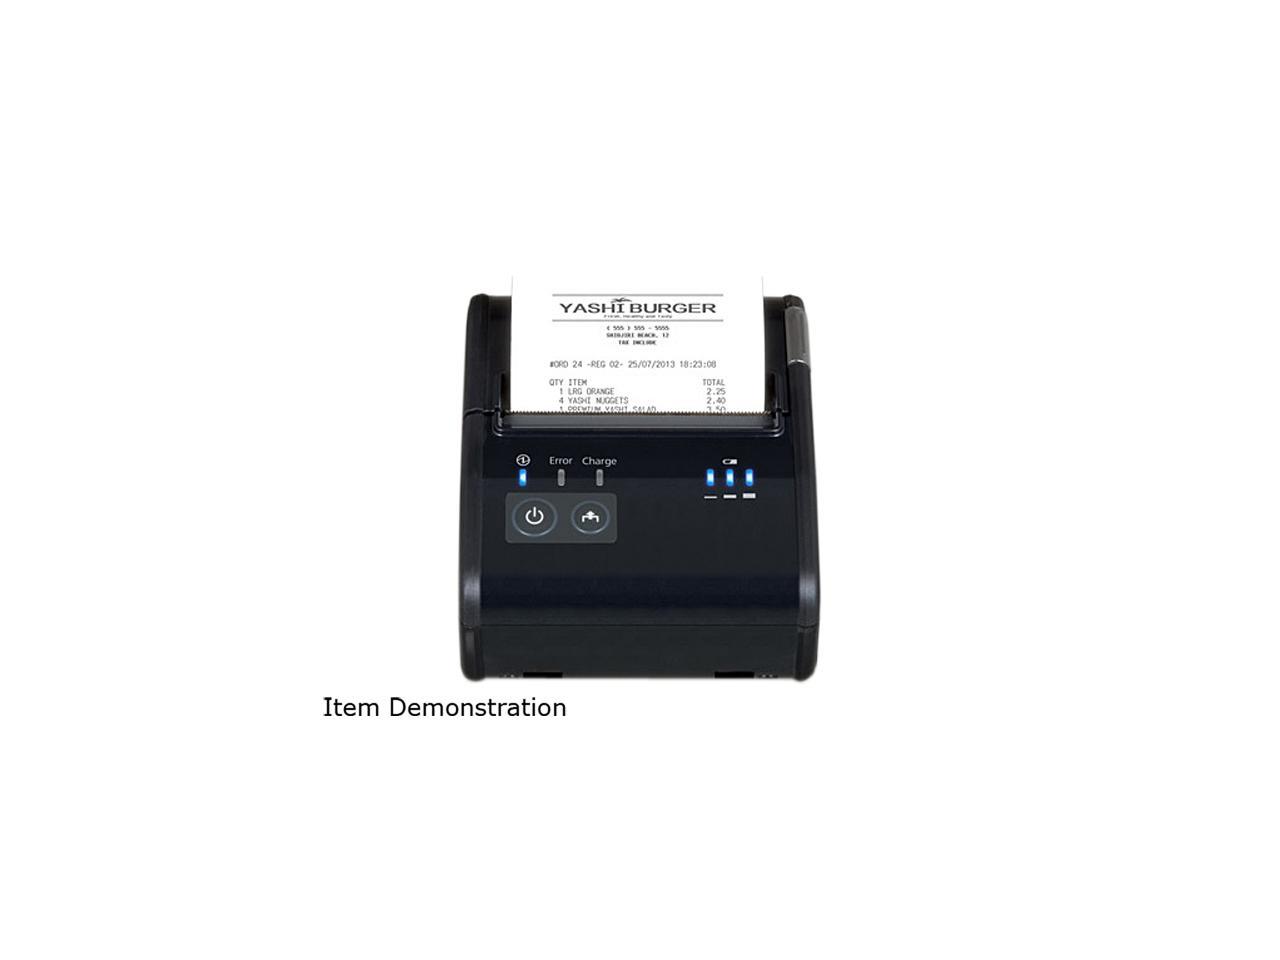 Epson Mobilink TM-P80 Mobile Wireless Receipt Printer, Bluetooth, Black - C31CD70A9971